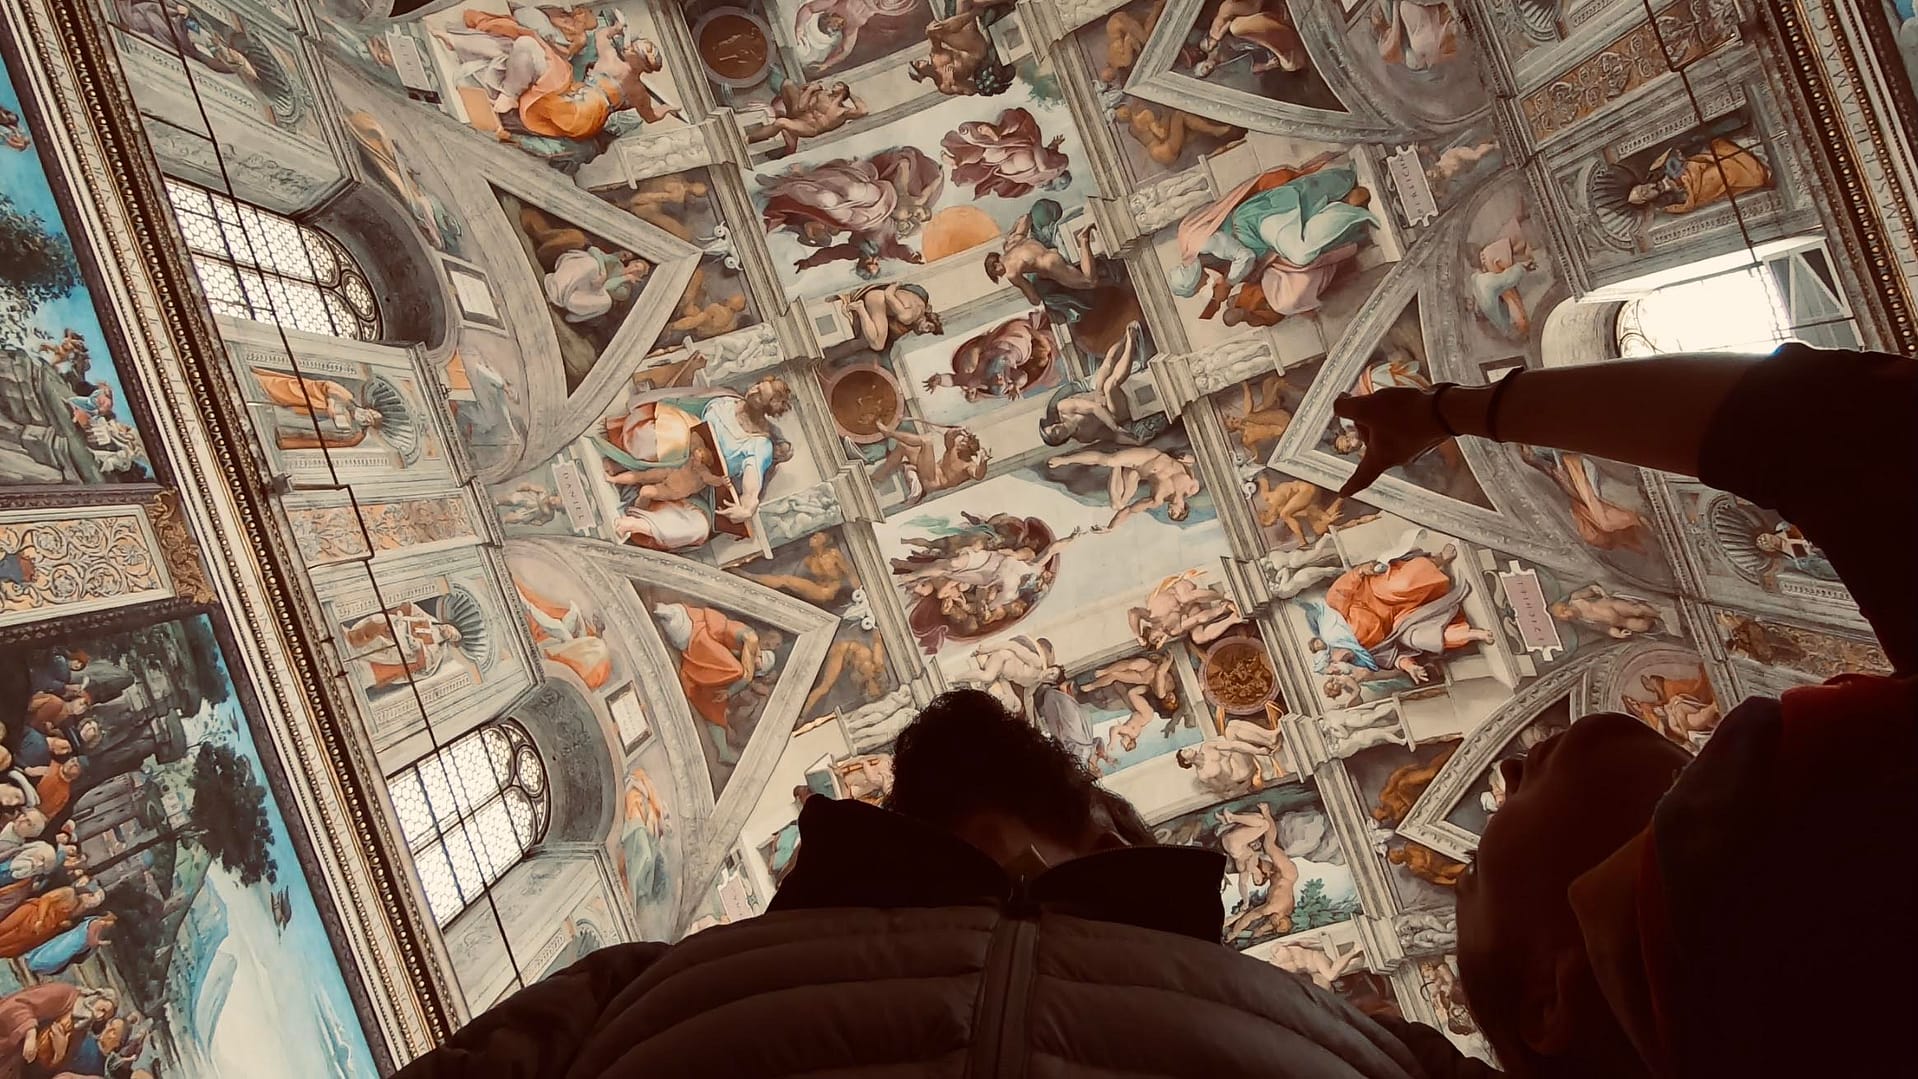 Michelangelo, Sistine Chapel (Capilla Sixtina)